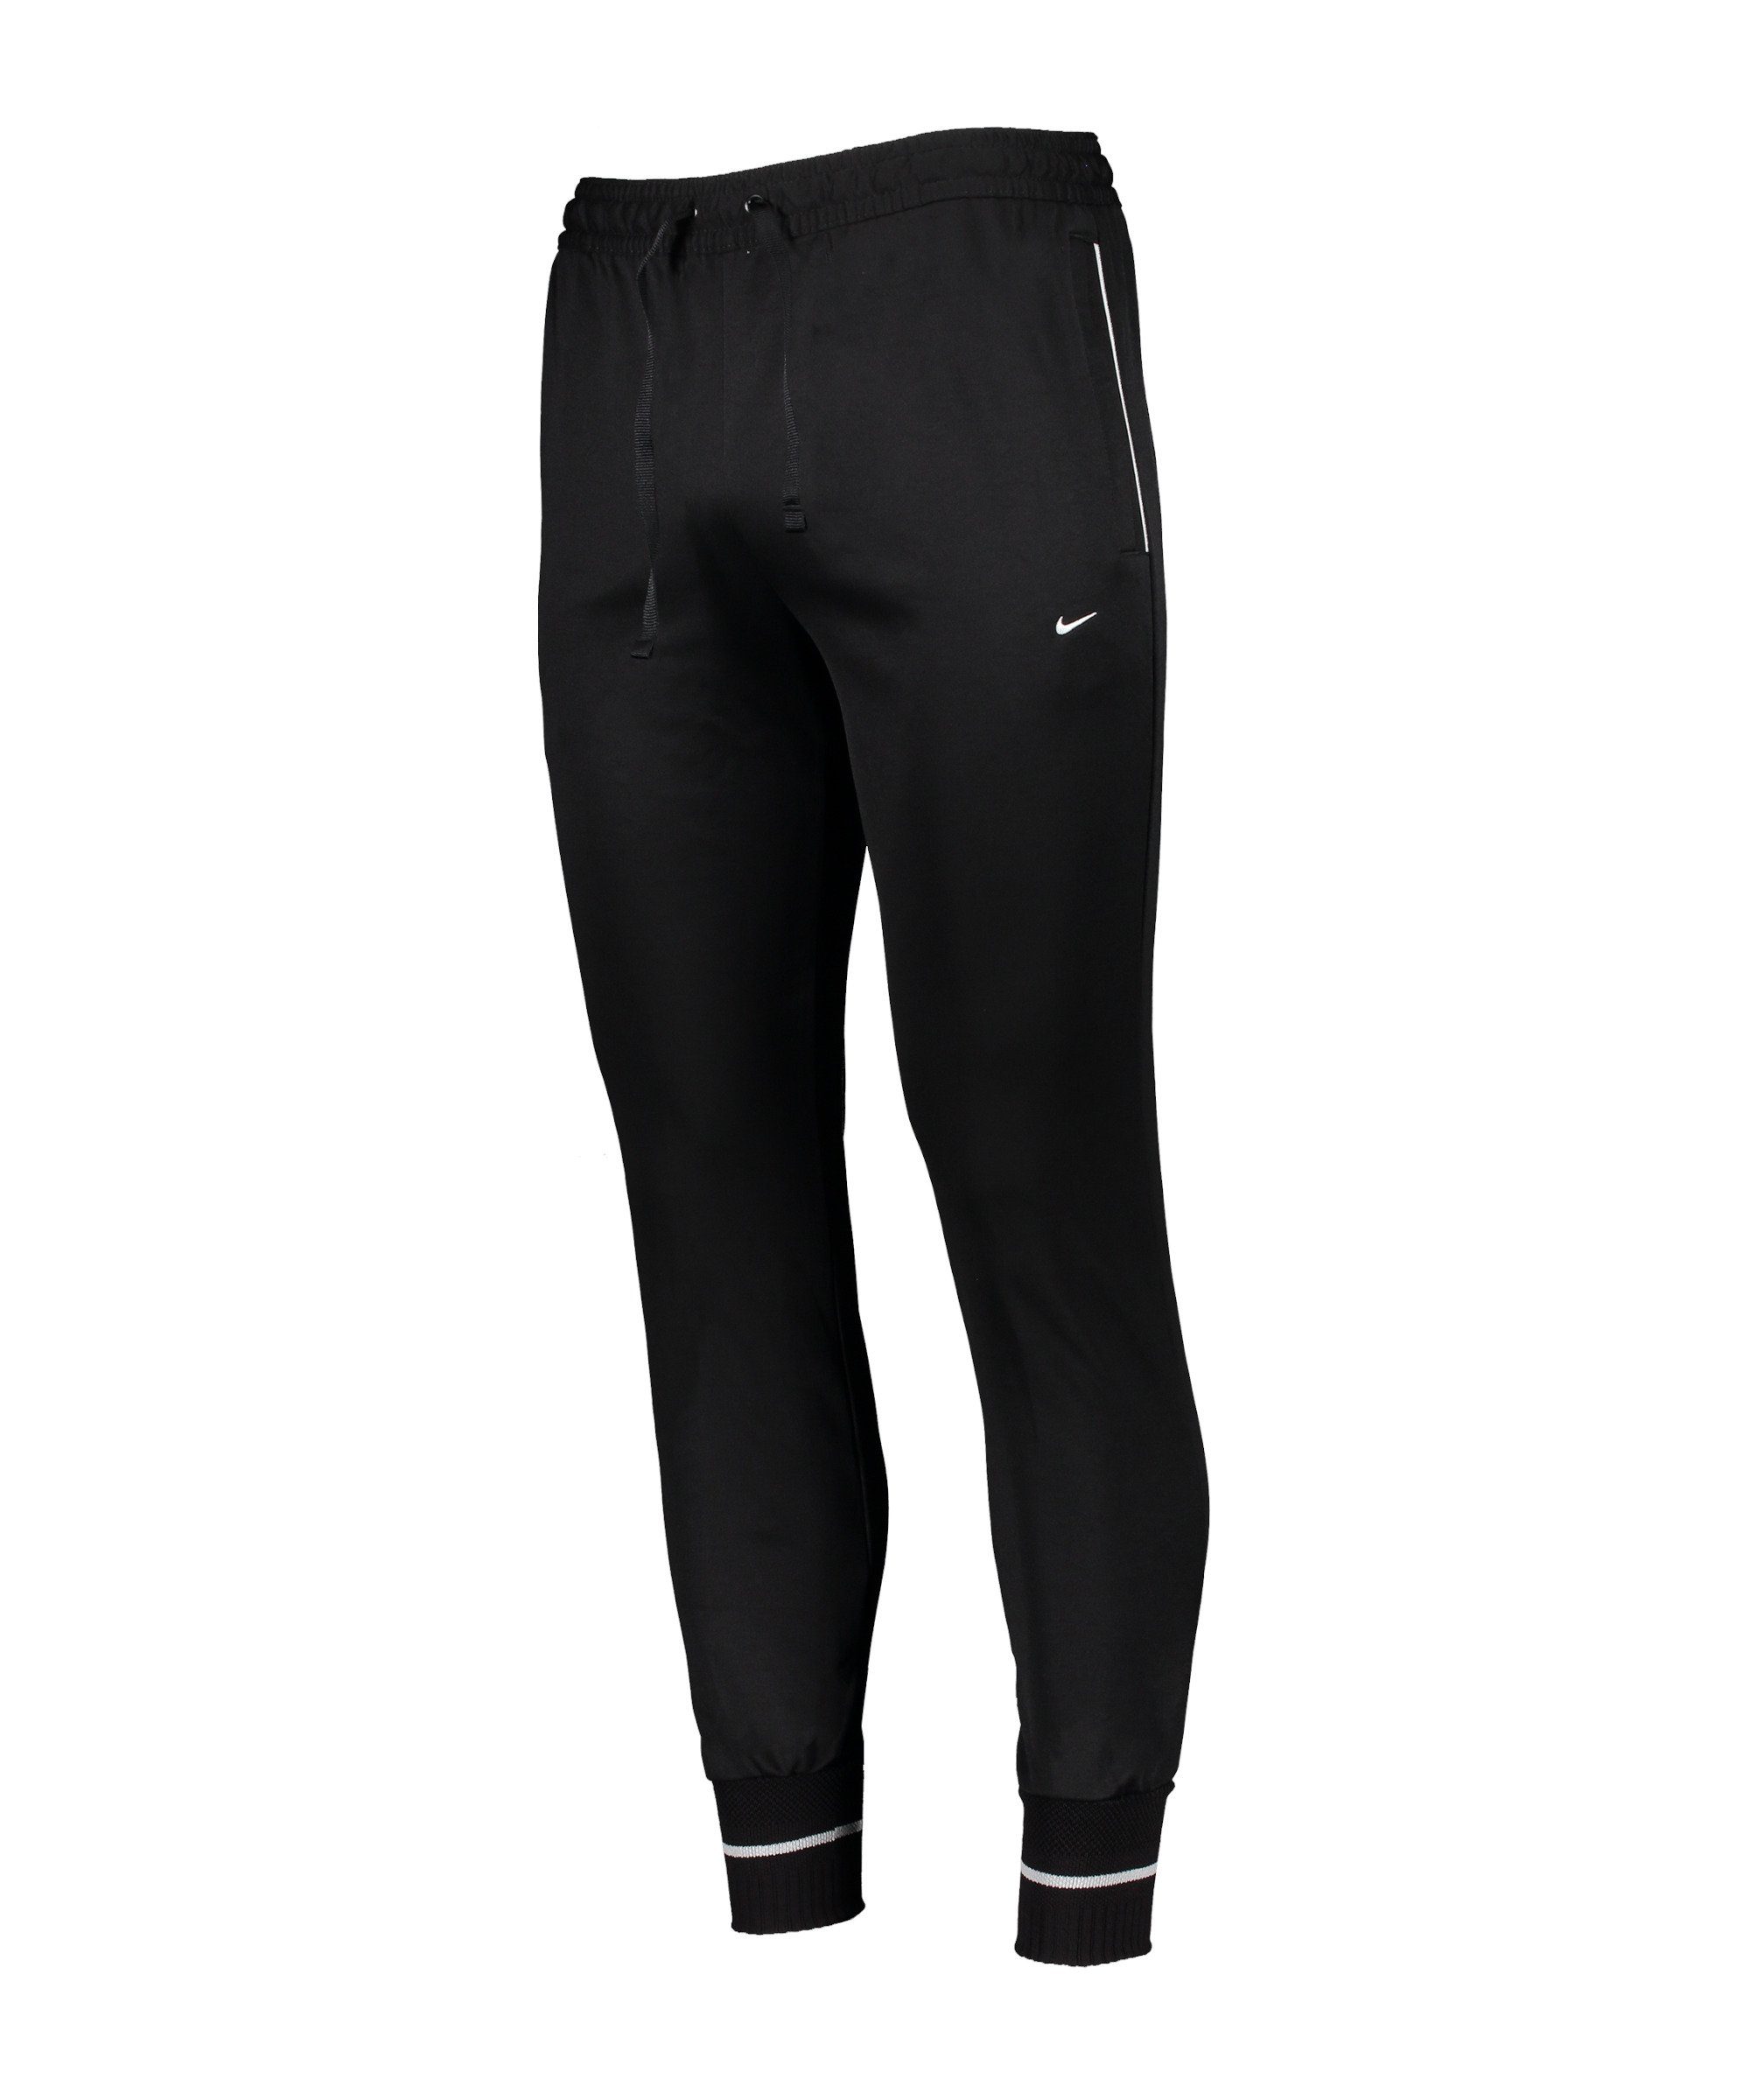 Jogginghose Strike Express 22 Nike Sporthose schwarzweissweiss